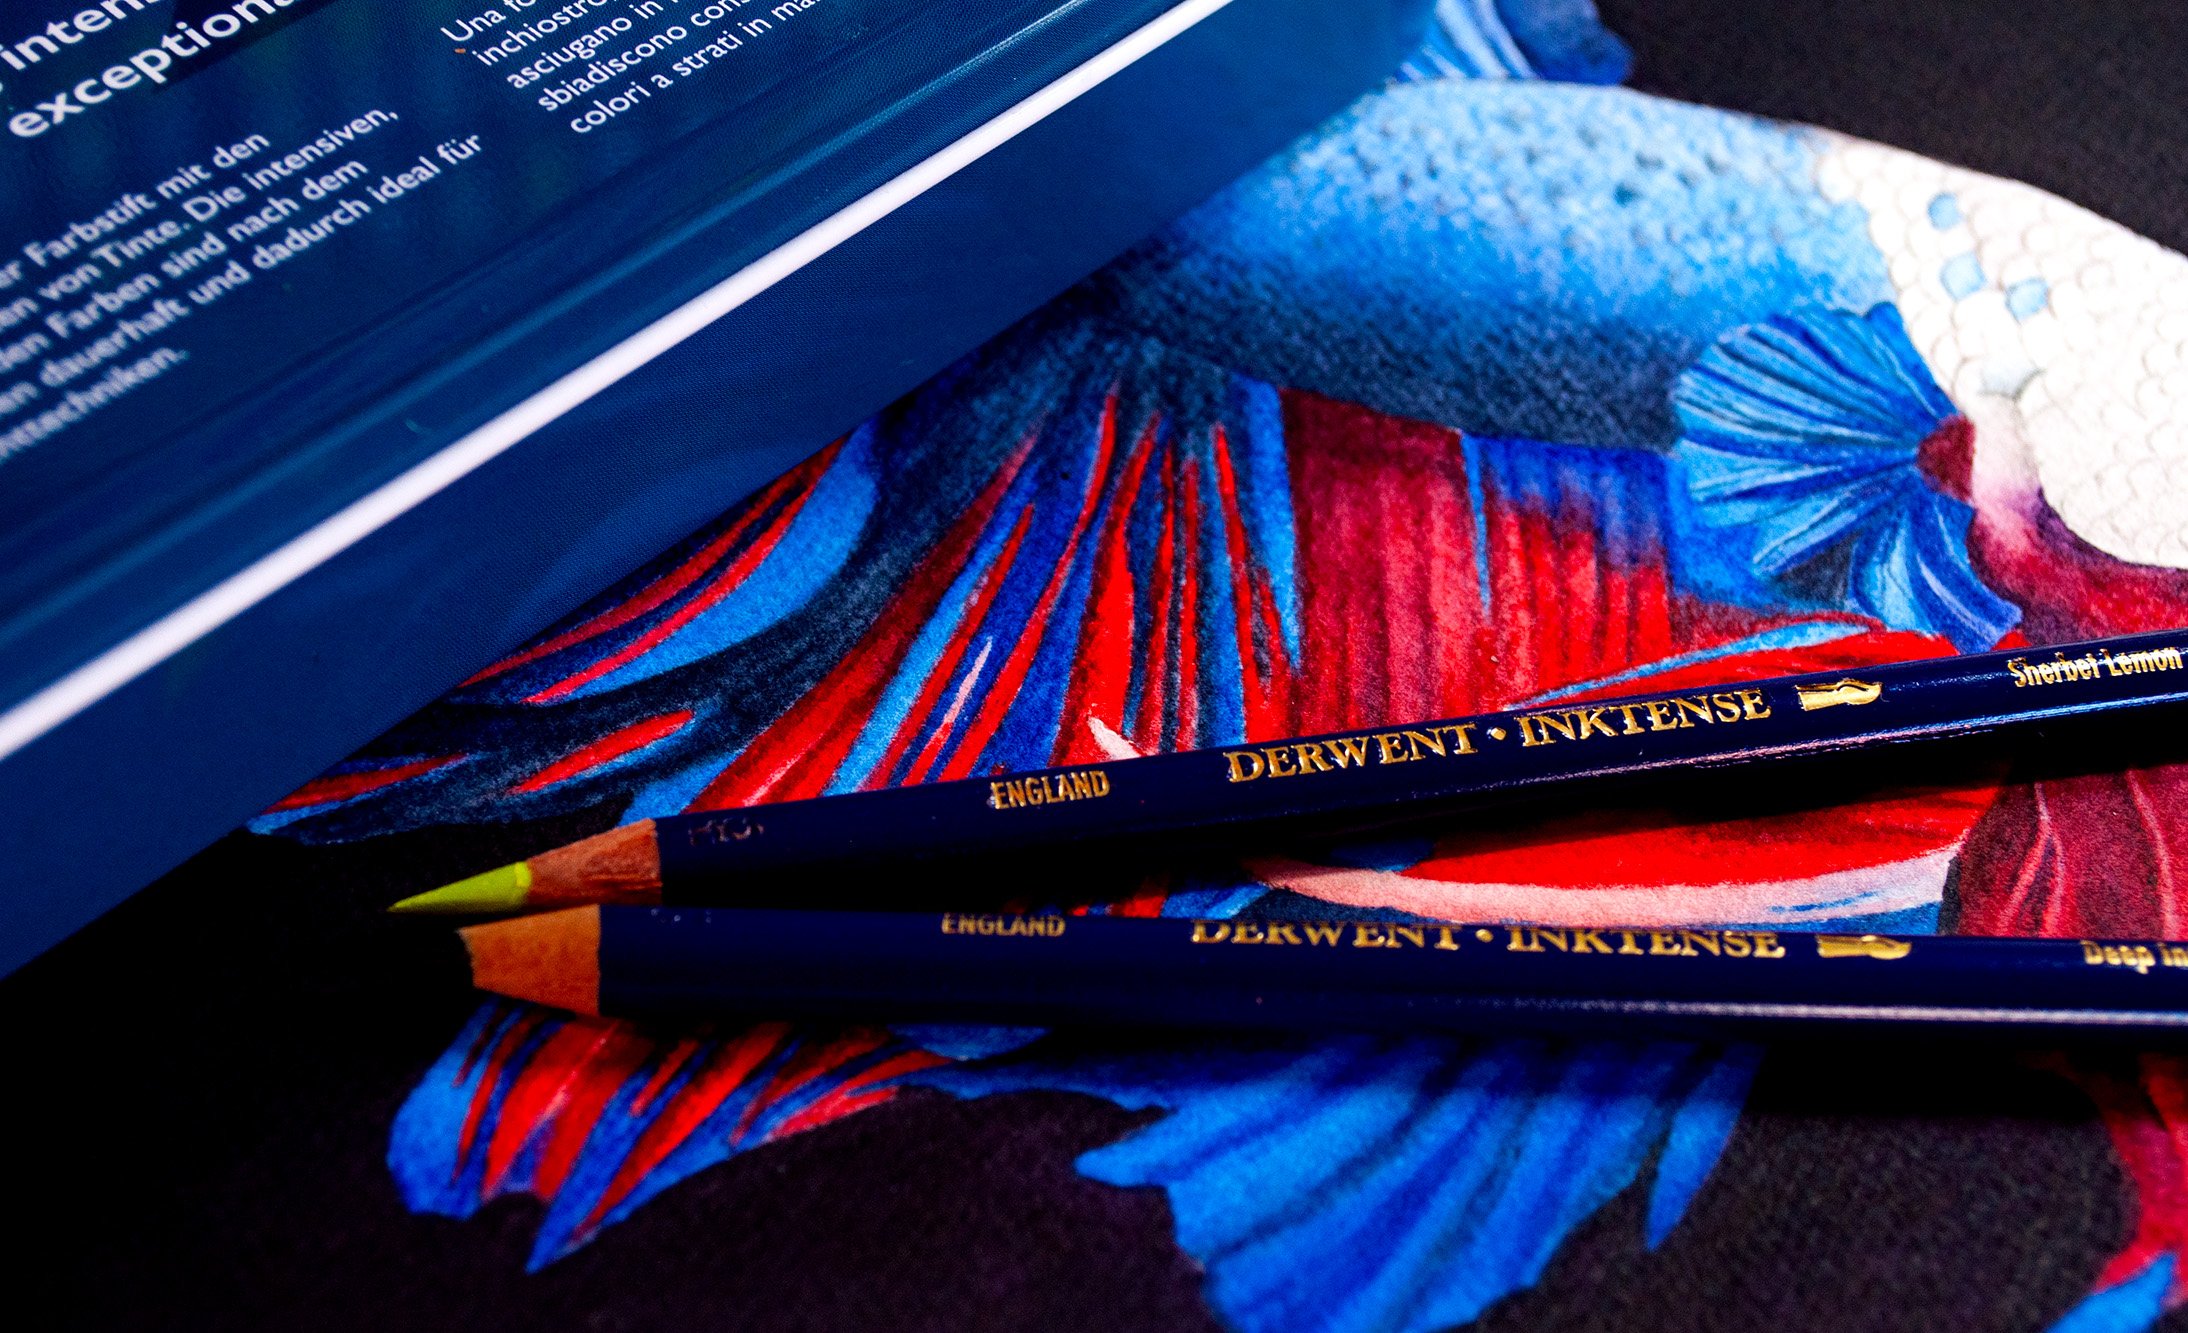 Derwent Inktense 100 Set Pencil Review — The Art Gear Guide